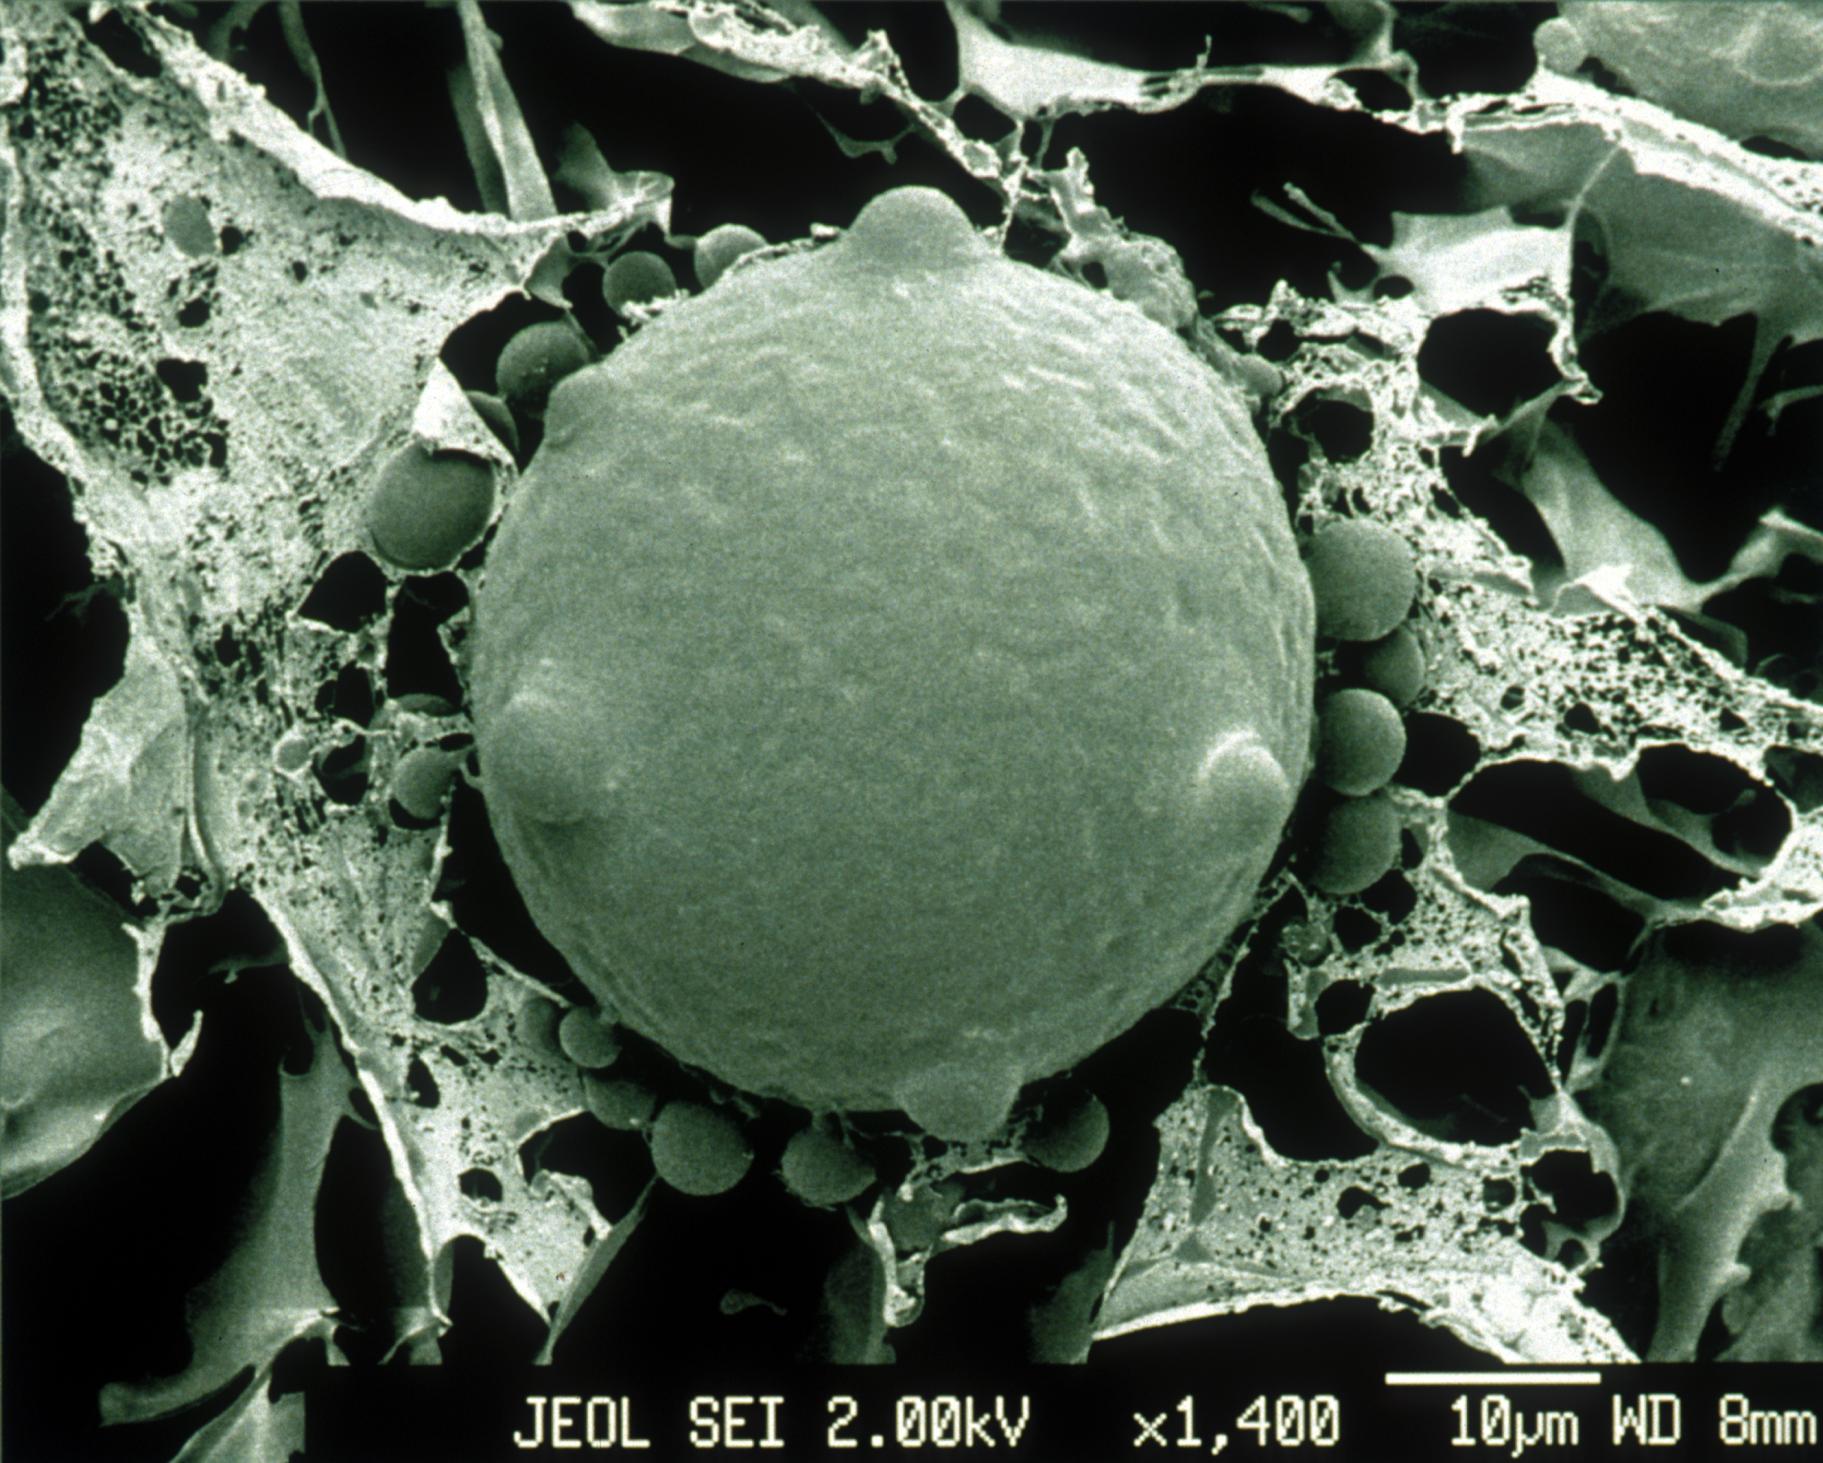 Scanning electron micrograph of a frozen intact zoospore and sporangia of the chytrid fungus (Batrachochytrium dendrobatidis).